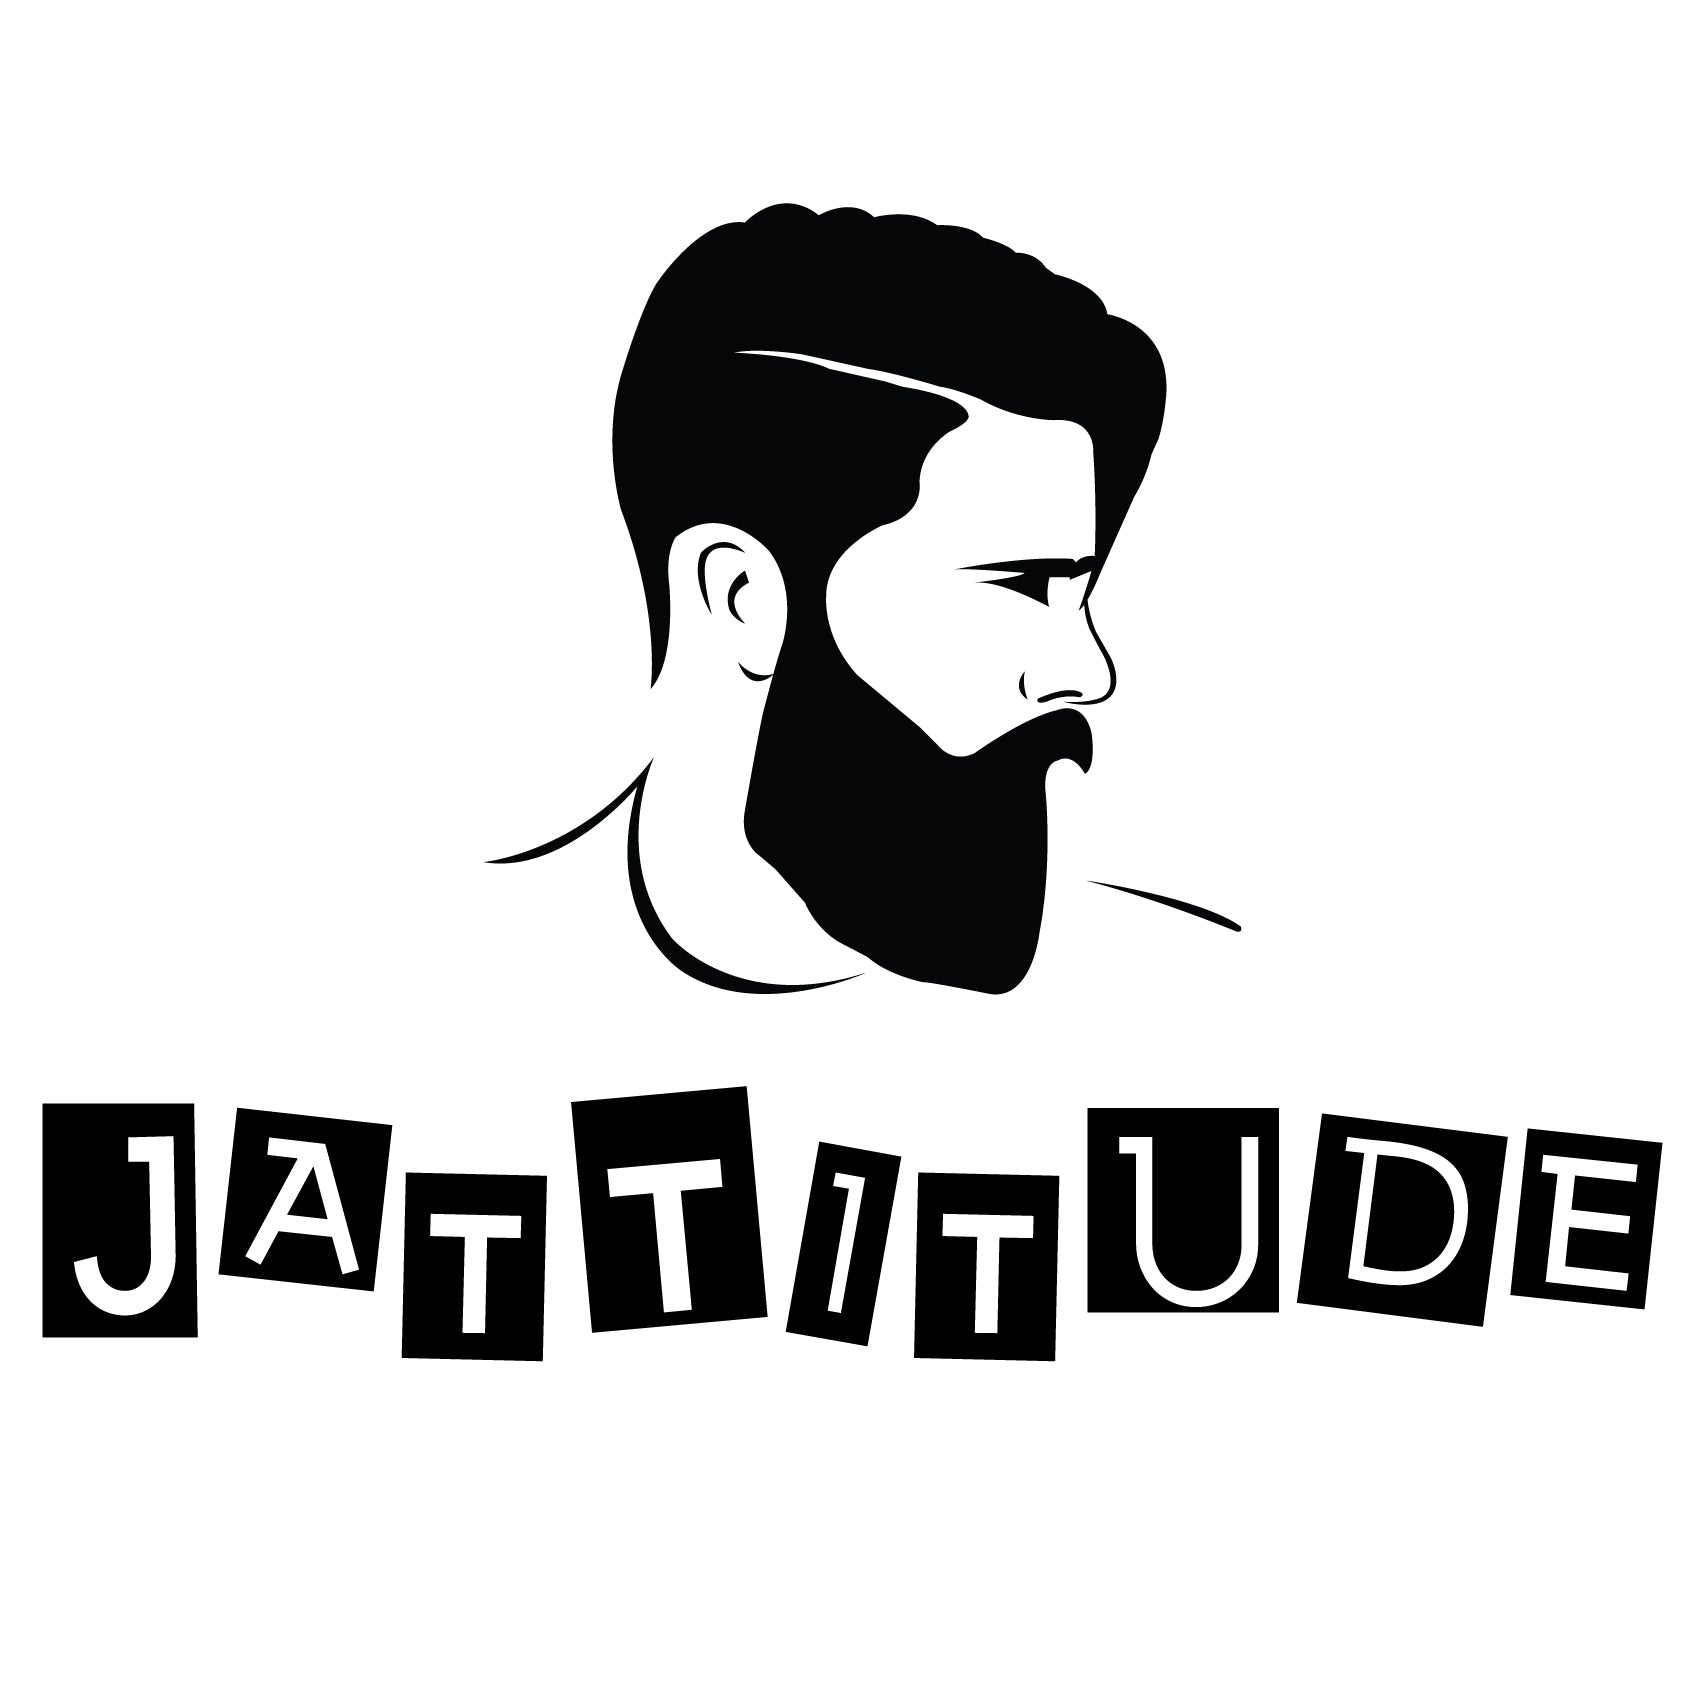 Jattitude Reactr Tshirts For Men - Eyewearlabs